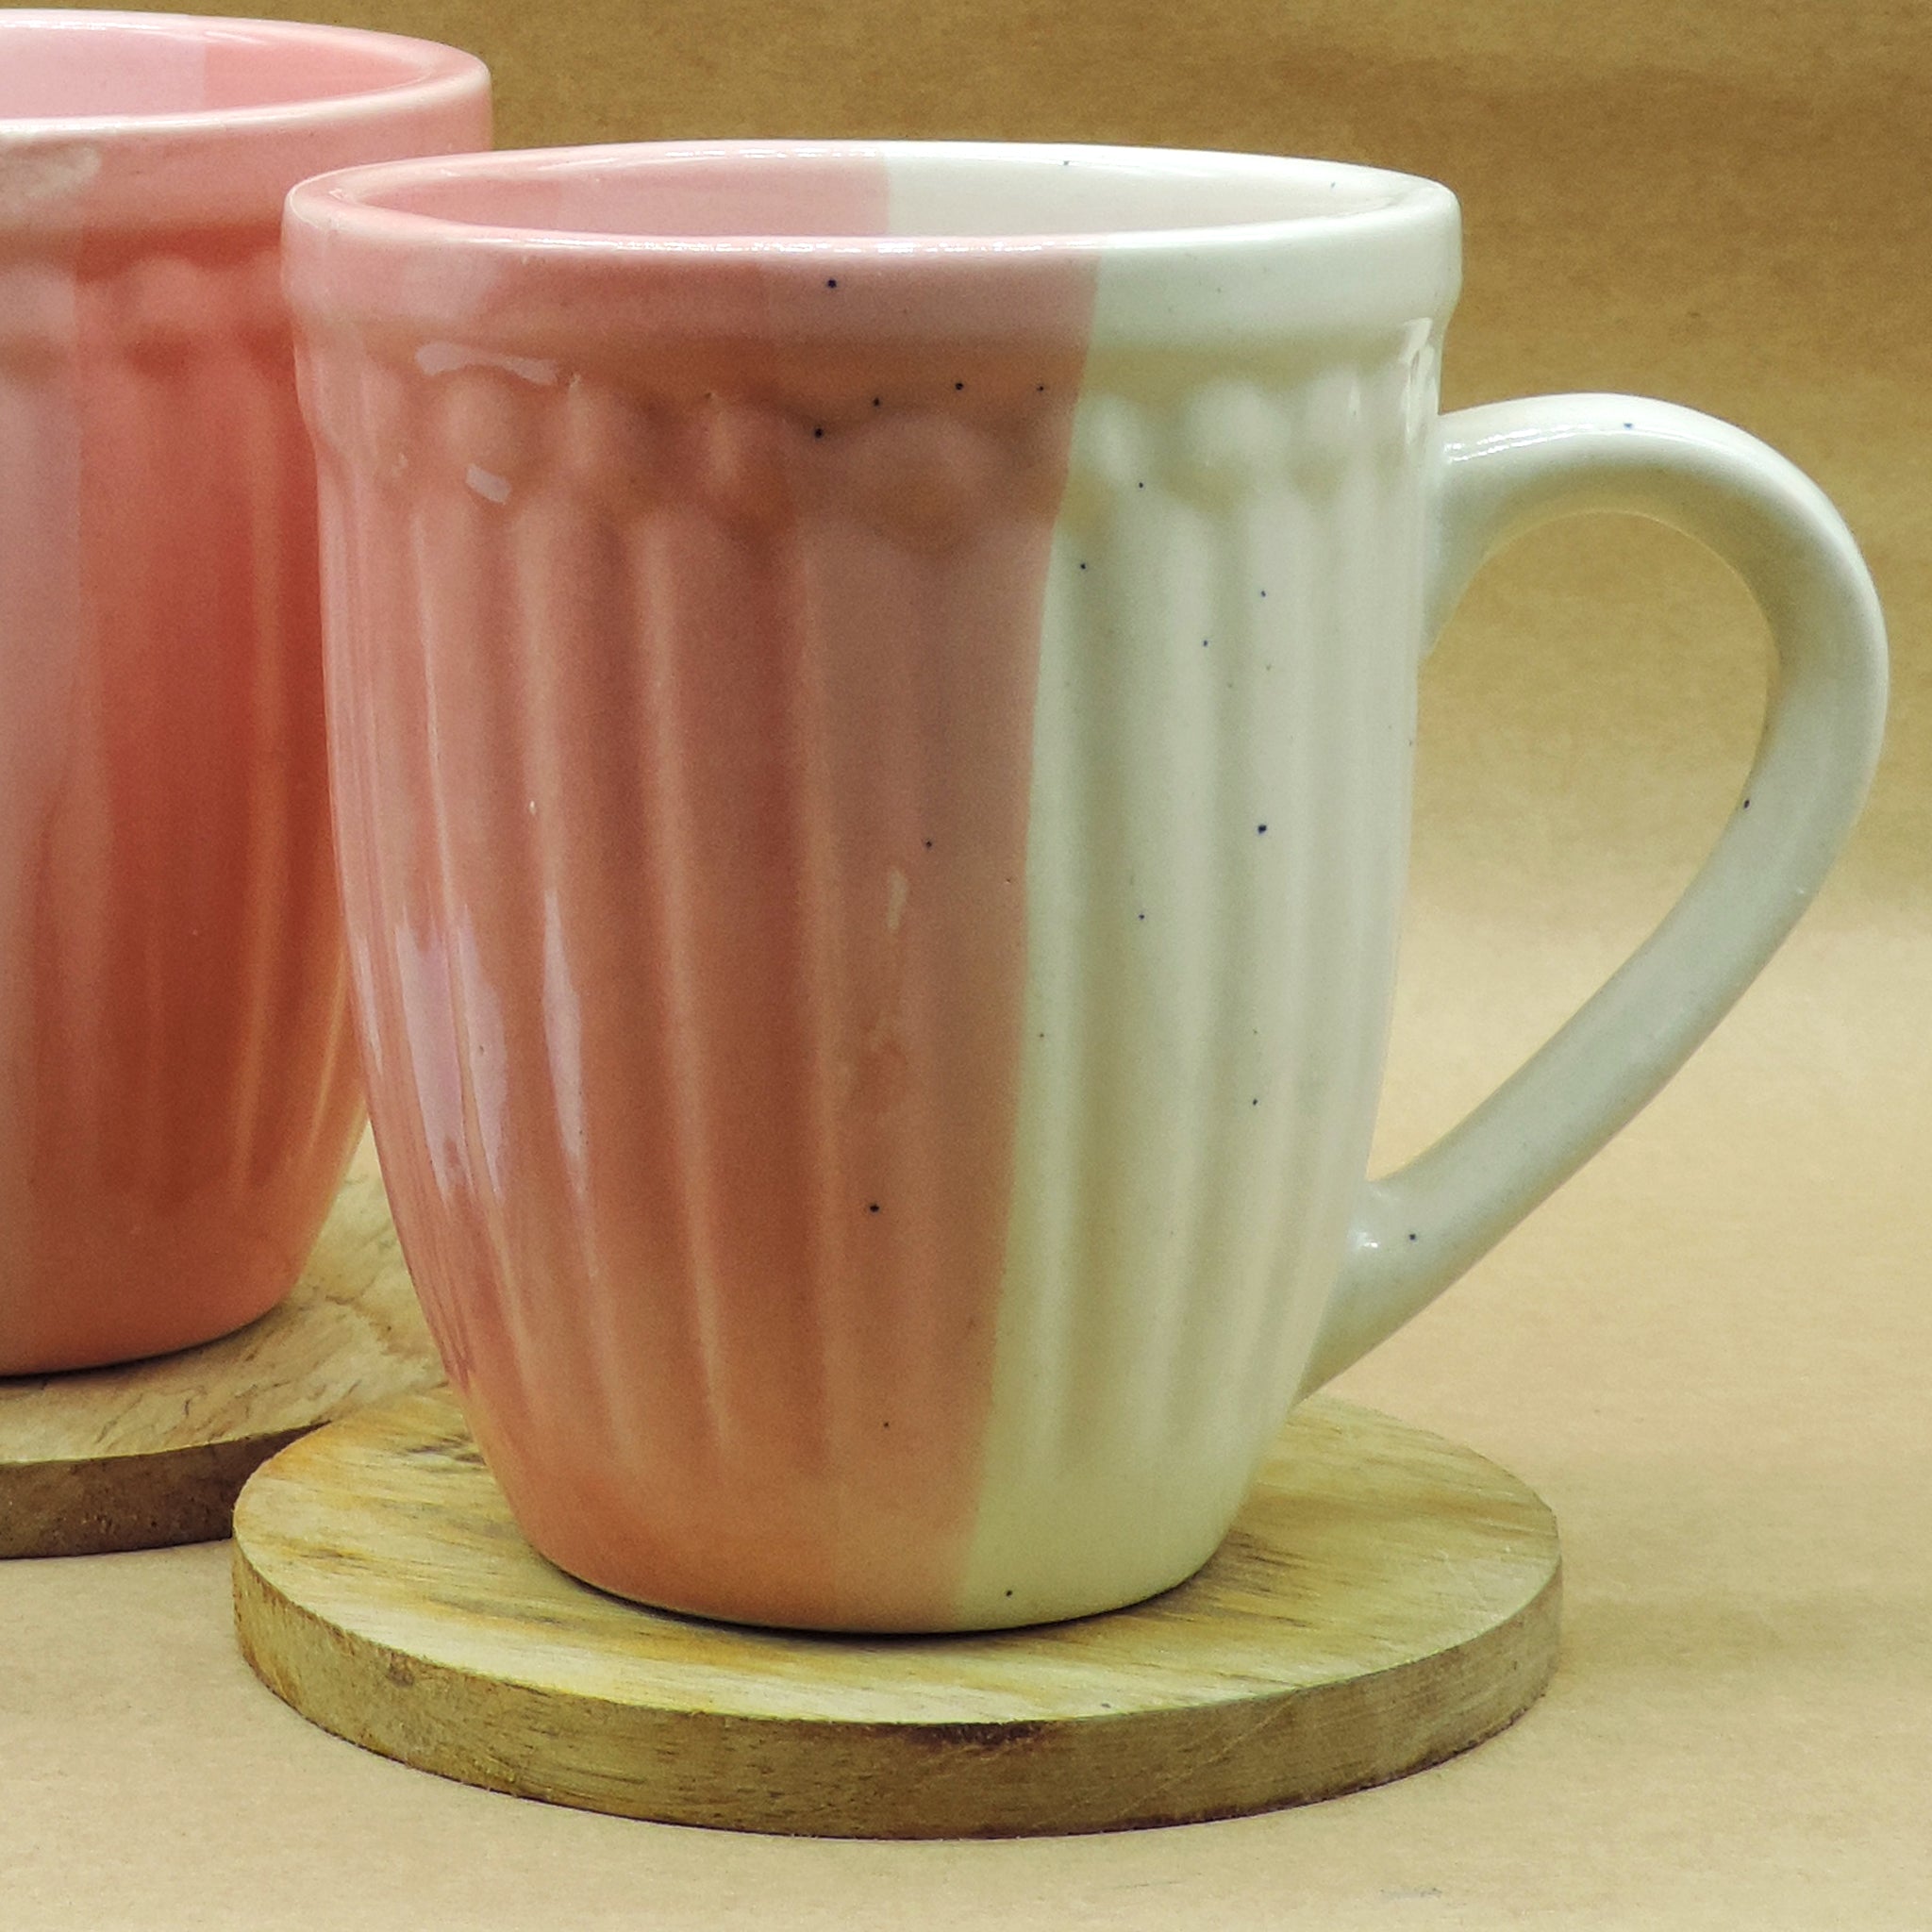 Dinnerware Collection Pink & Cream Mugs Set of 2 - 11x6x10 cm